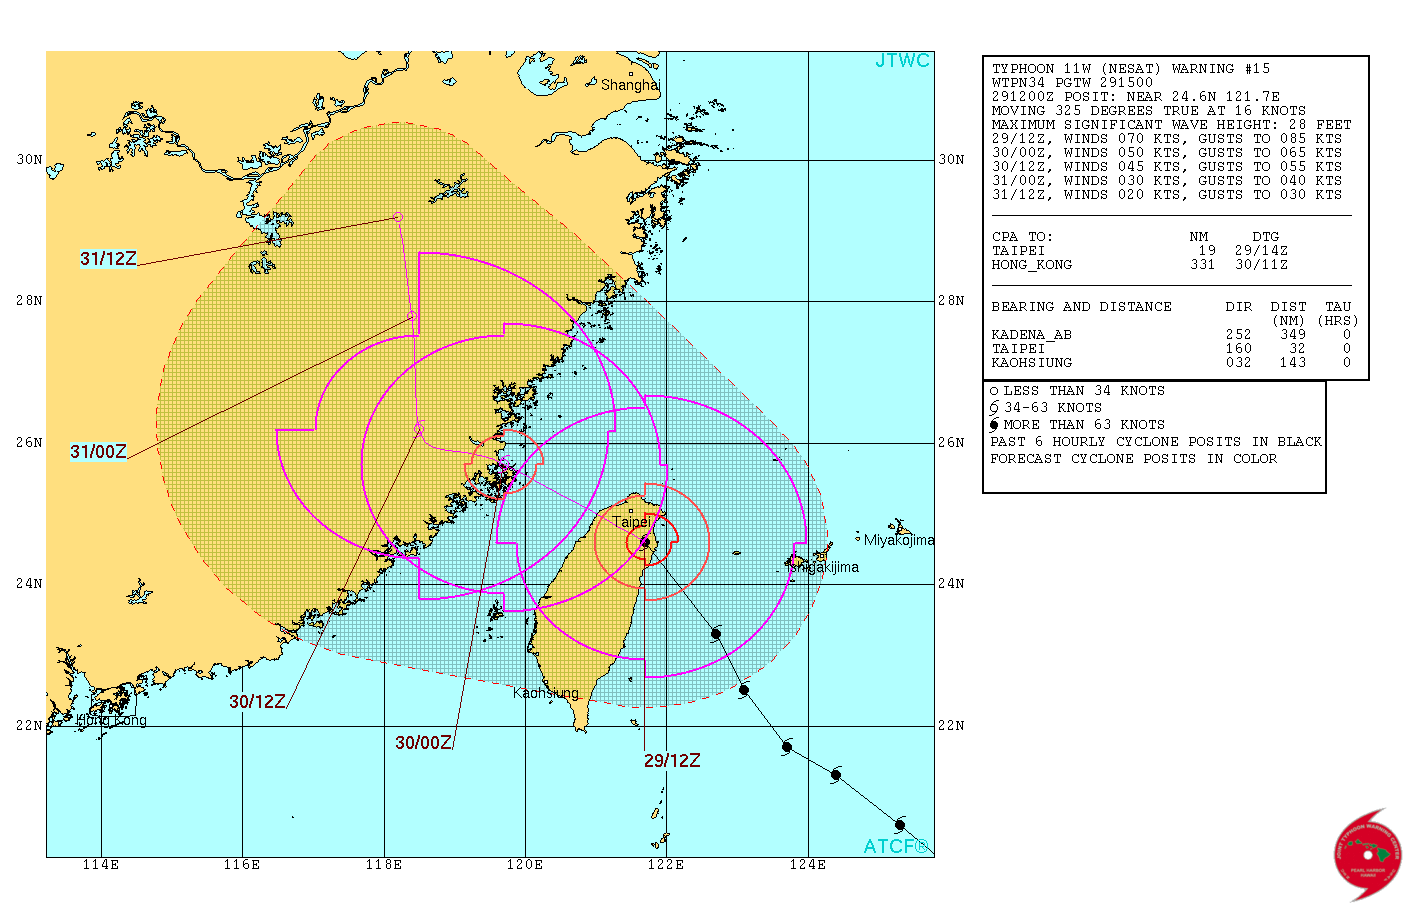 Typhoon Nesat forecast track by JTWC at 15:00 UTC on July 29, 2017